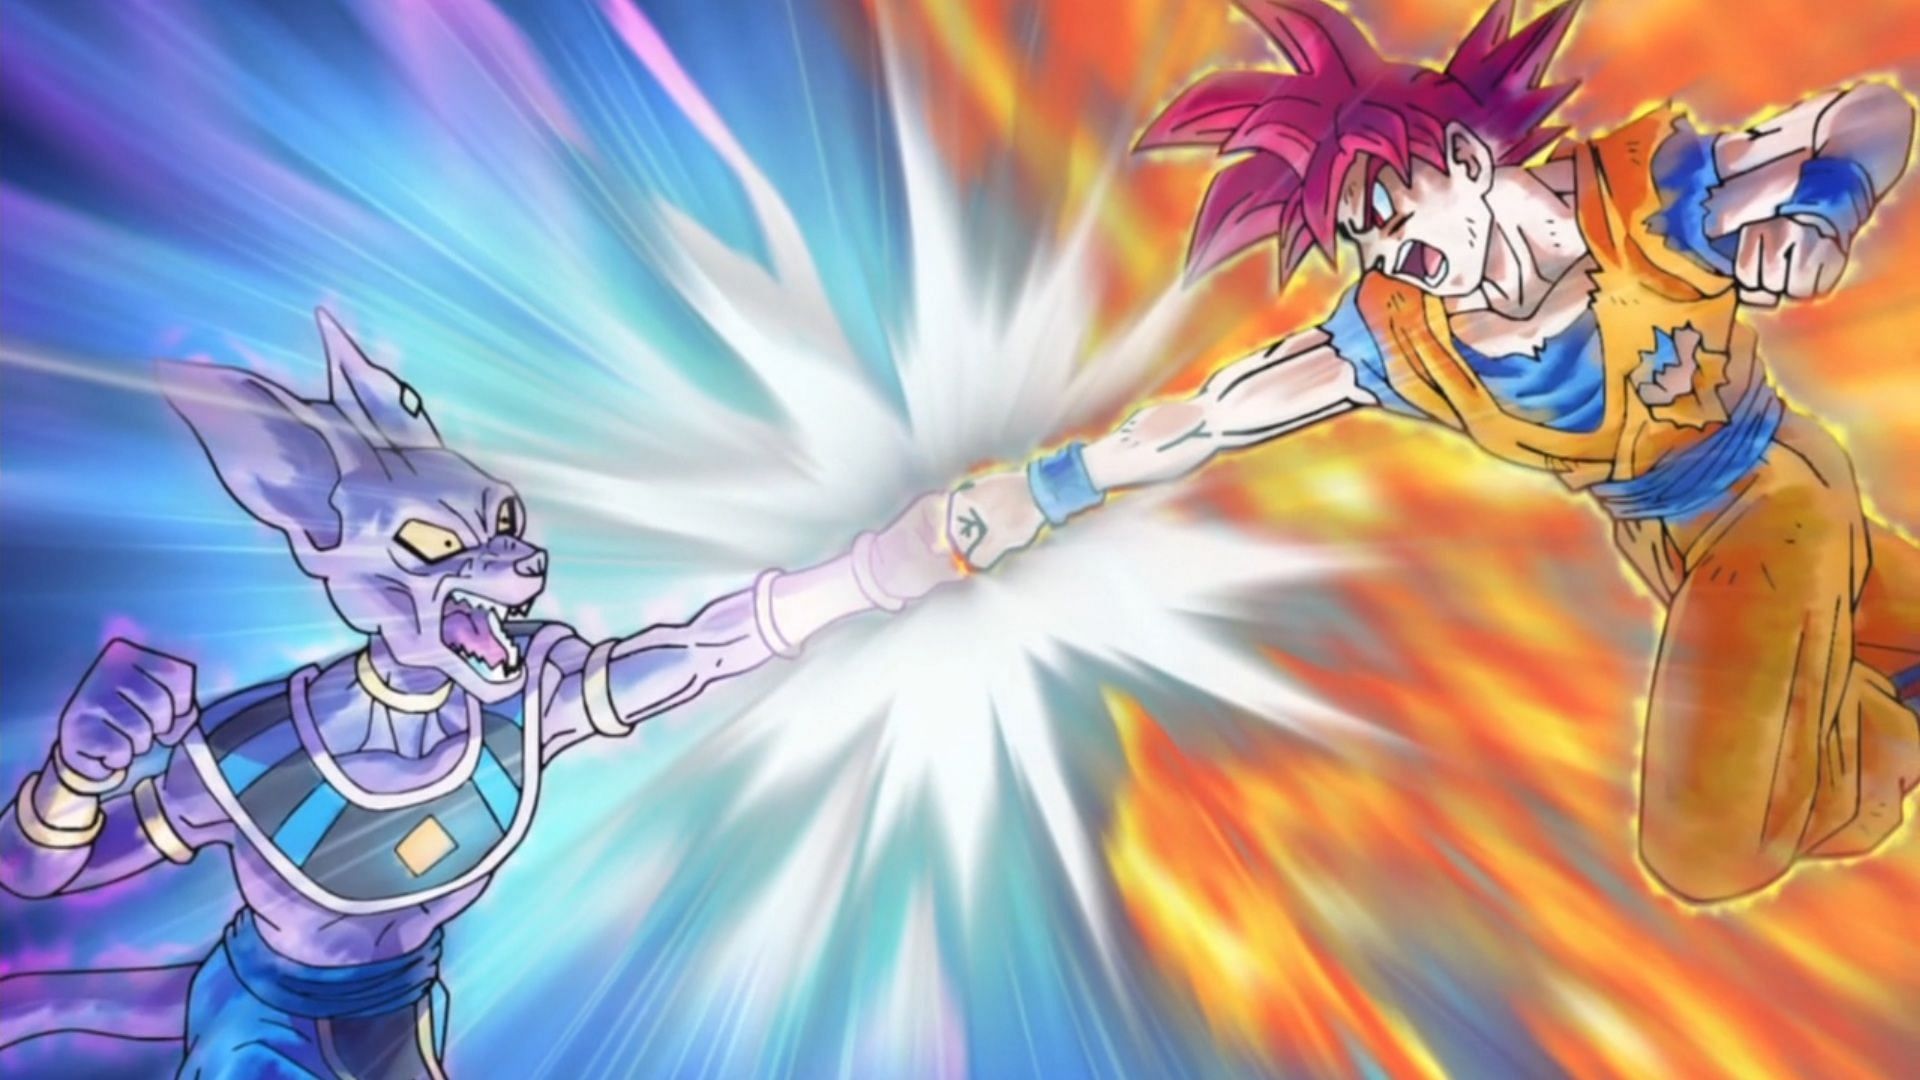 Goku and Beerus clash in promotional art for the Dragon Ball Super manga. (Image via Shueisha)